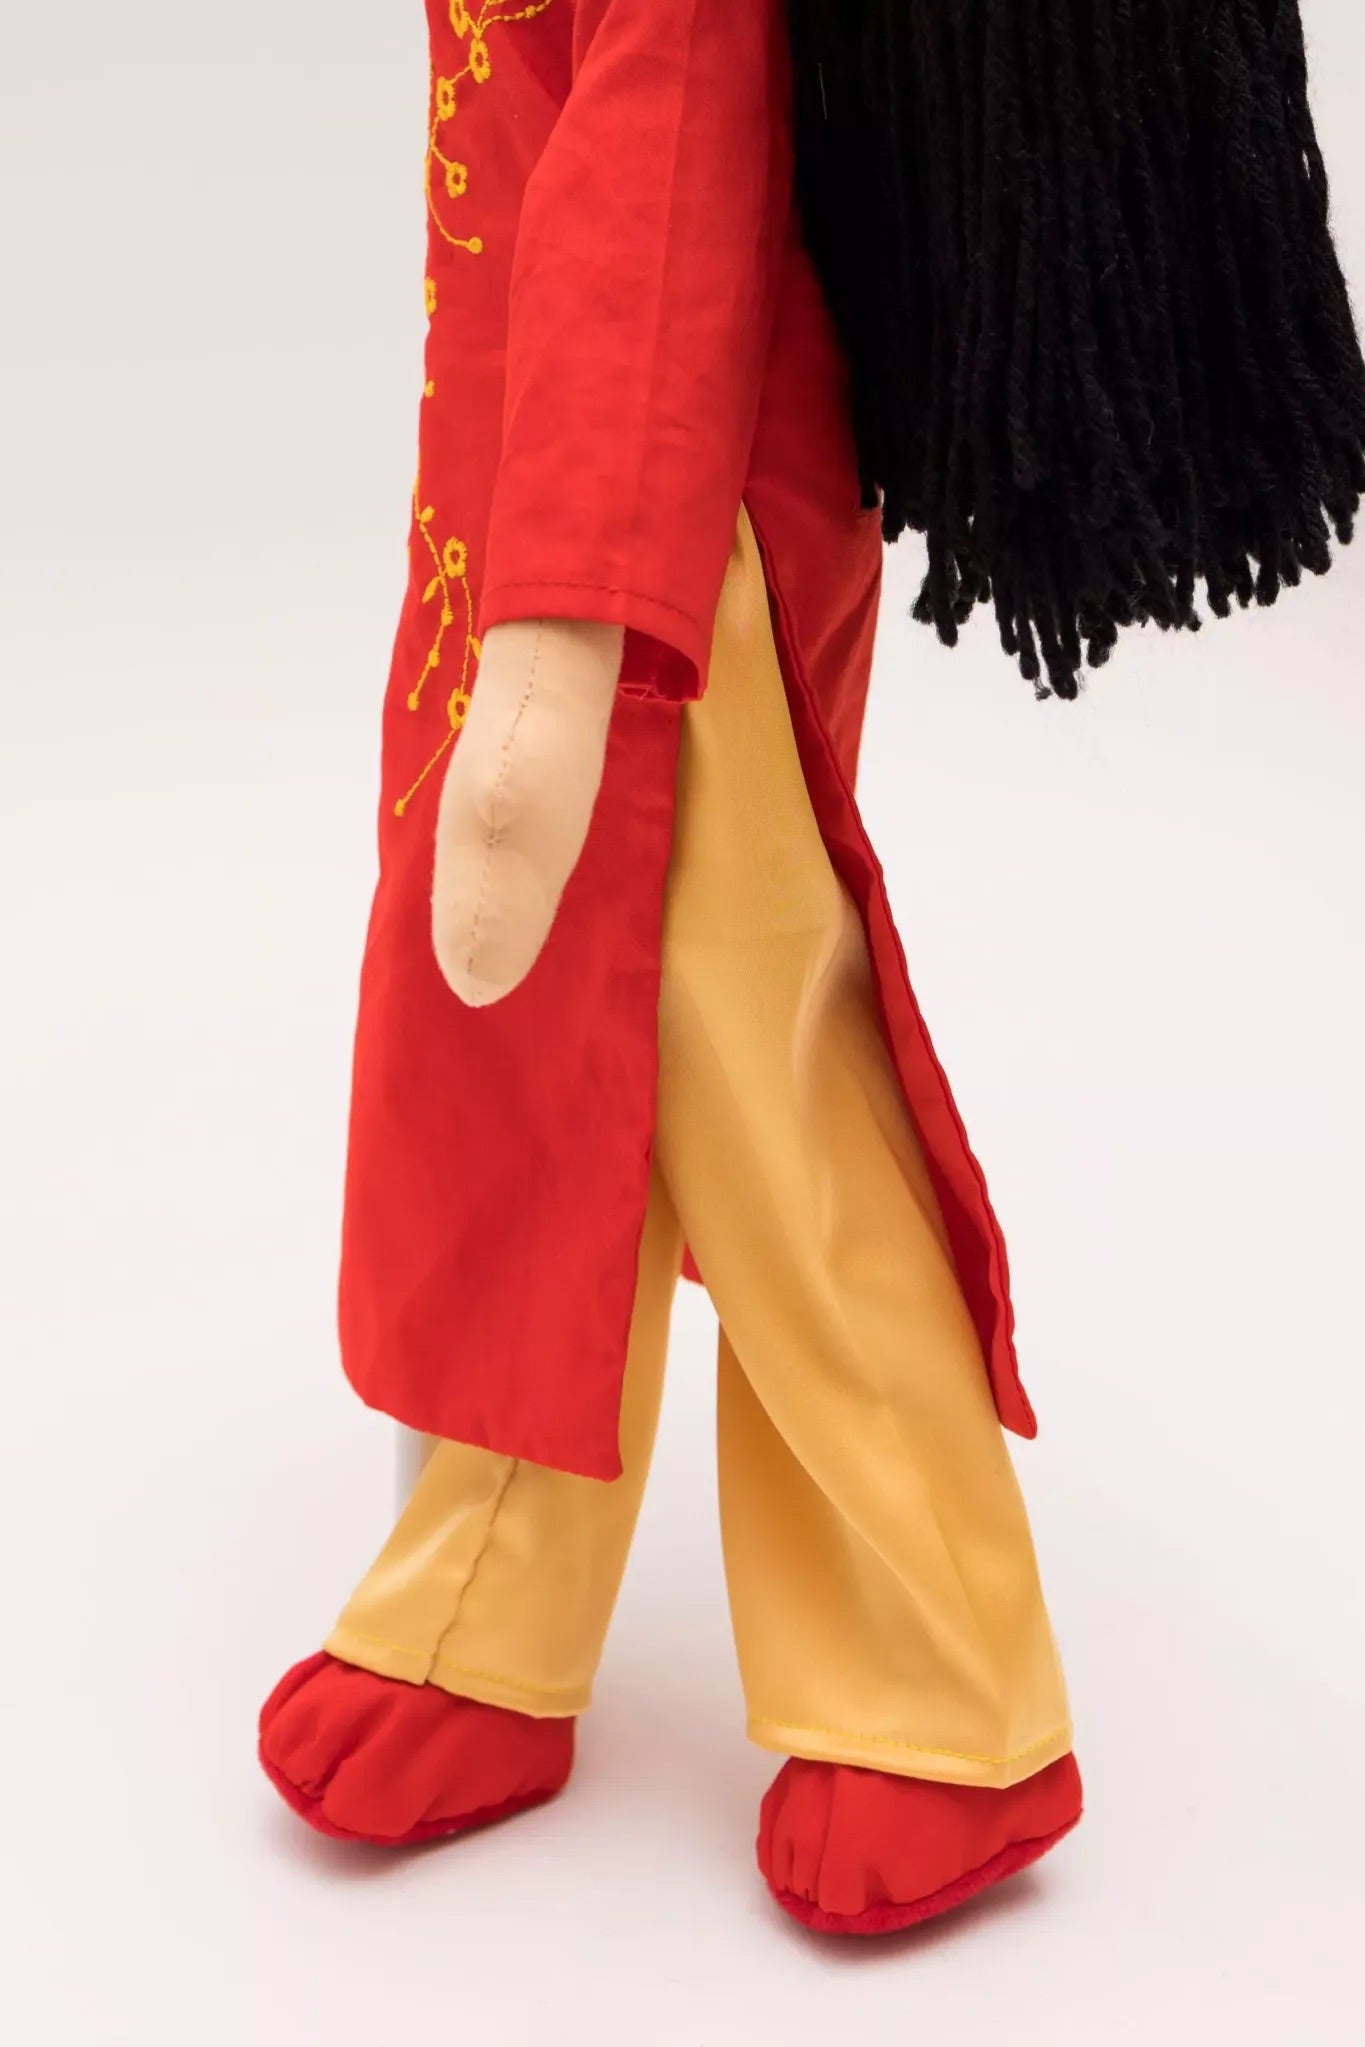 Vietnamese 'Hoa' Cultural Doll